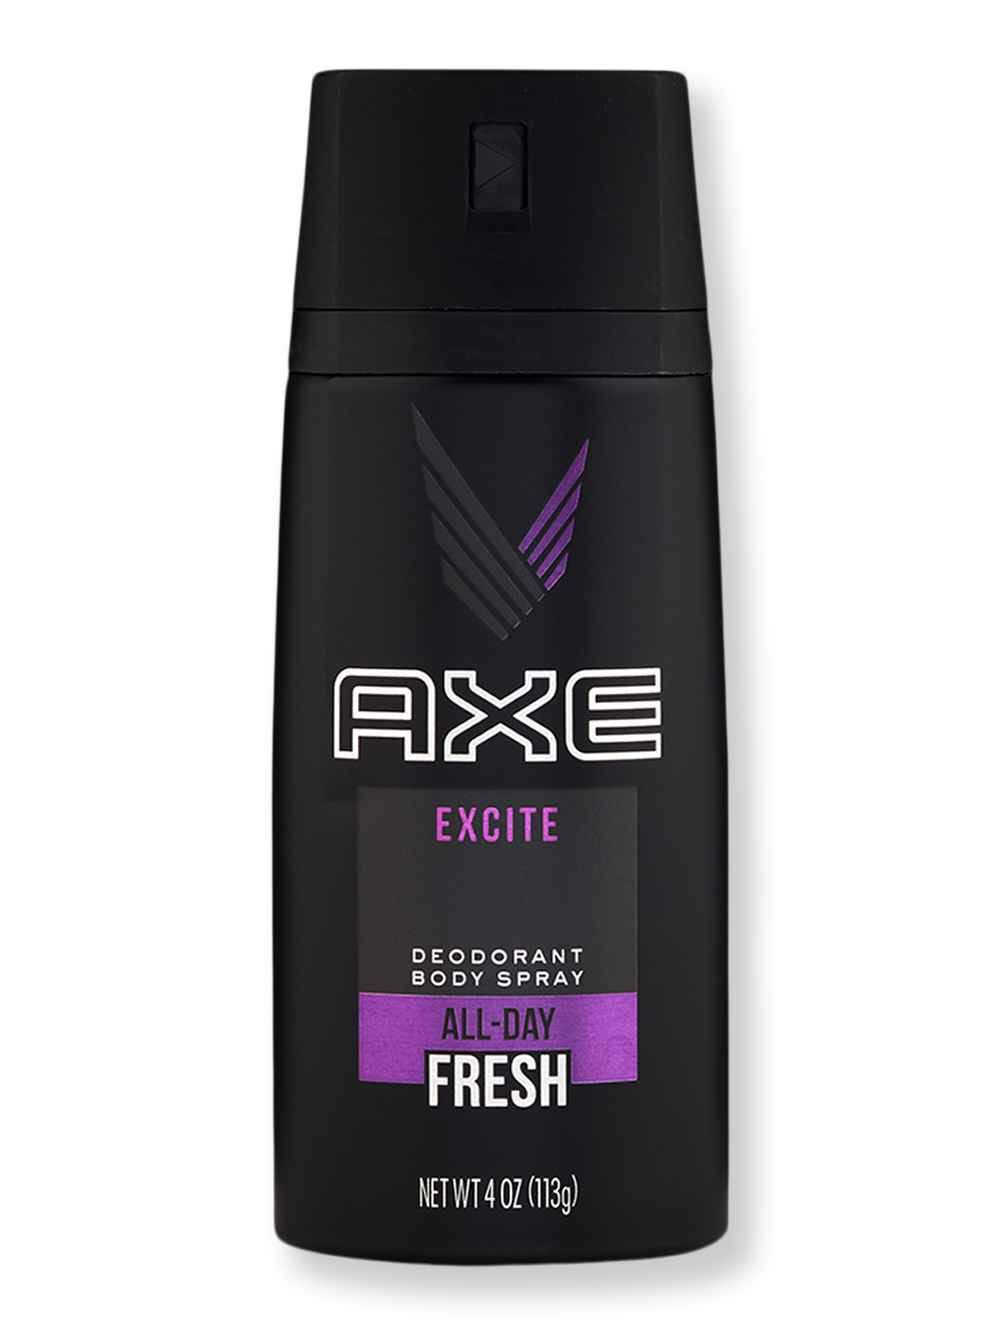 Axe Deodorant Body Spray - Excite, 4oz